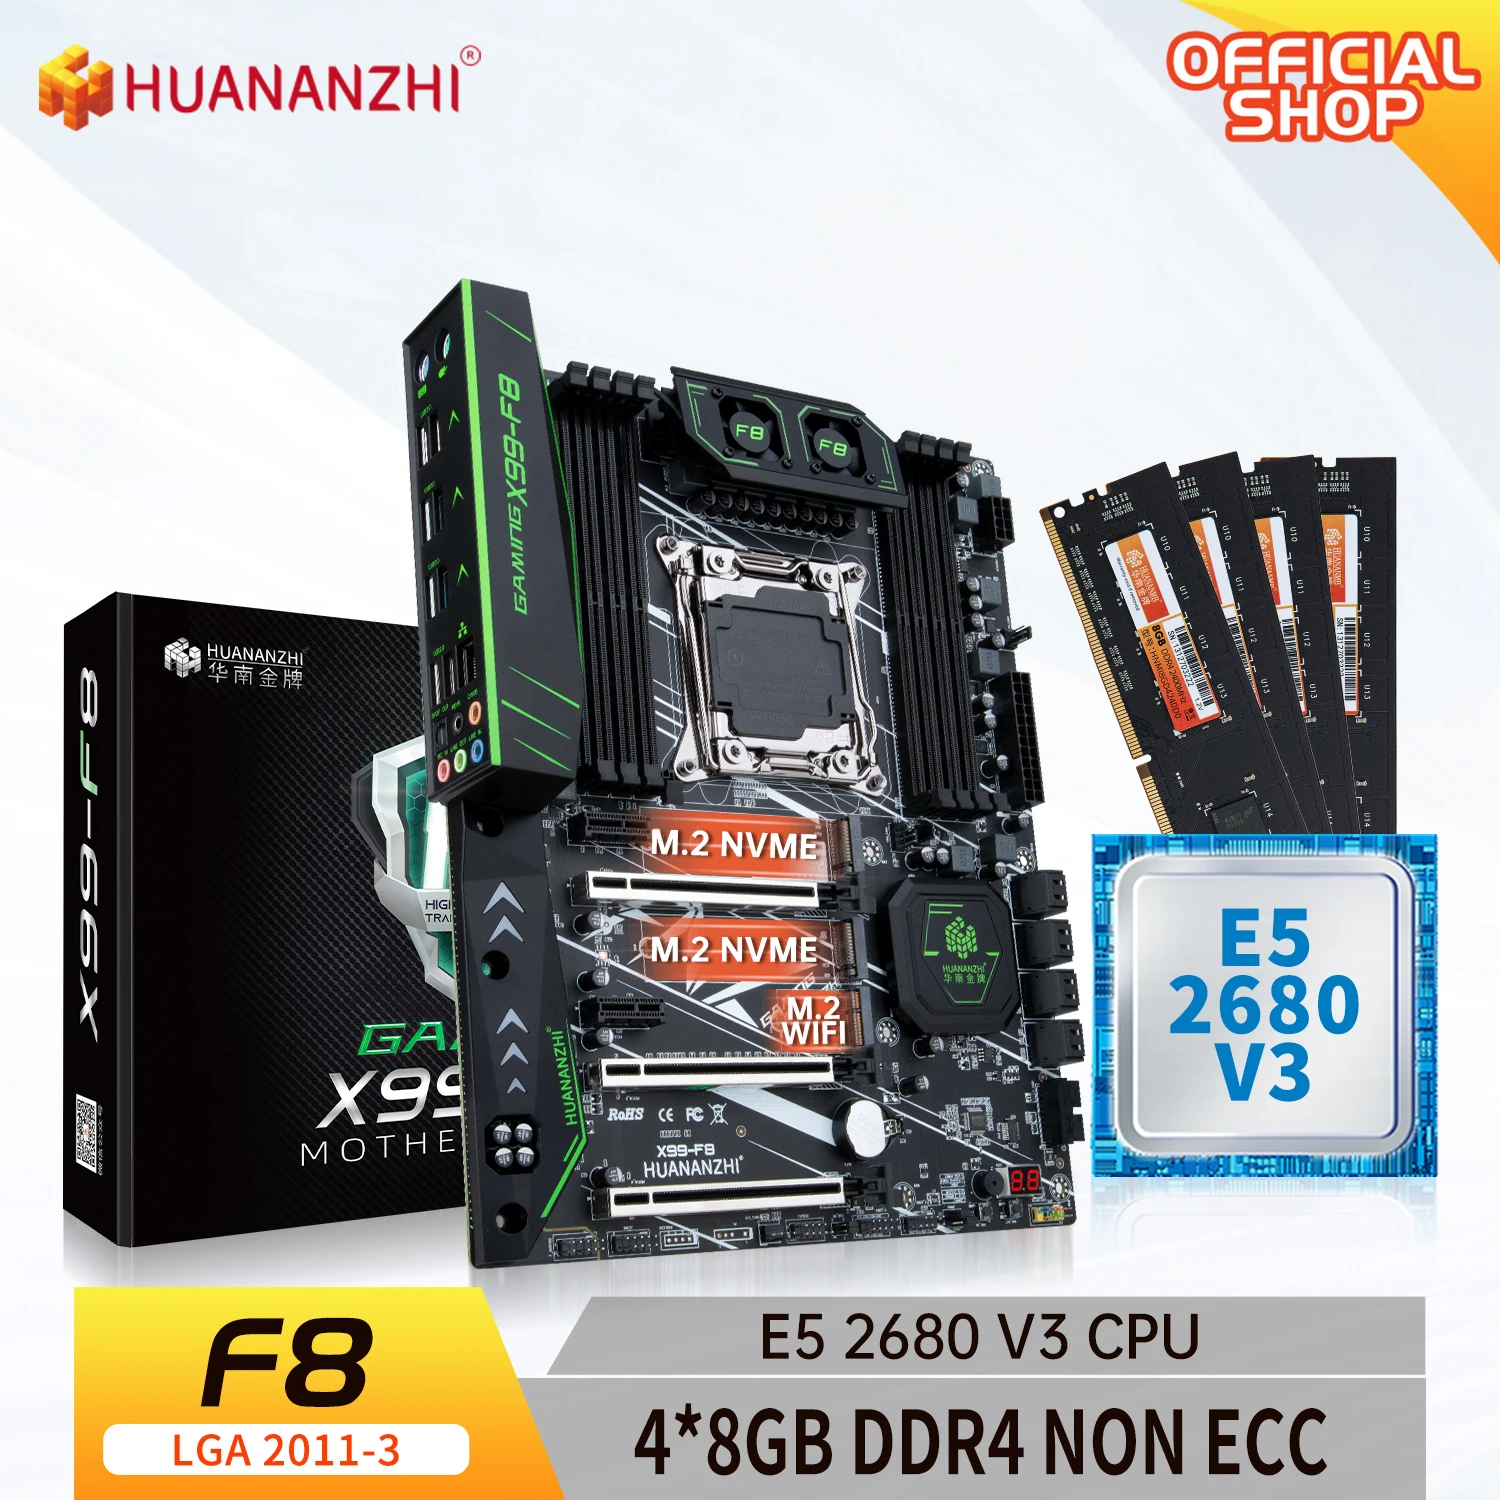 HUANANZHI X99 F8 X99 Motherboard with Intel XEON E5 2680 V3 with 4*8G DDR4 NON-ECC memory combo kit set NVME SATA 3.0 USB 3.0